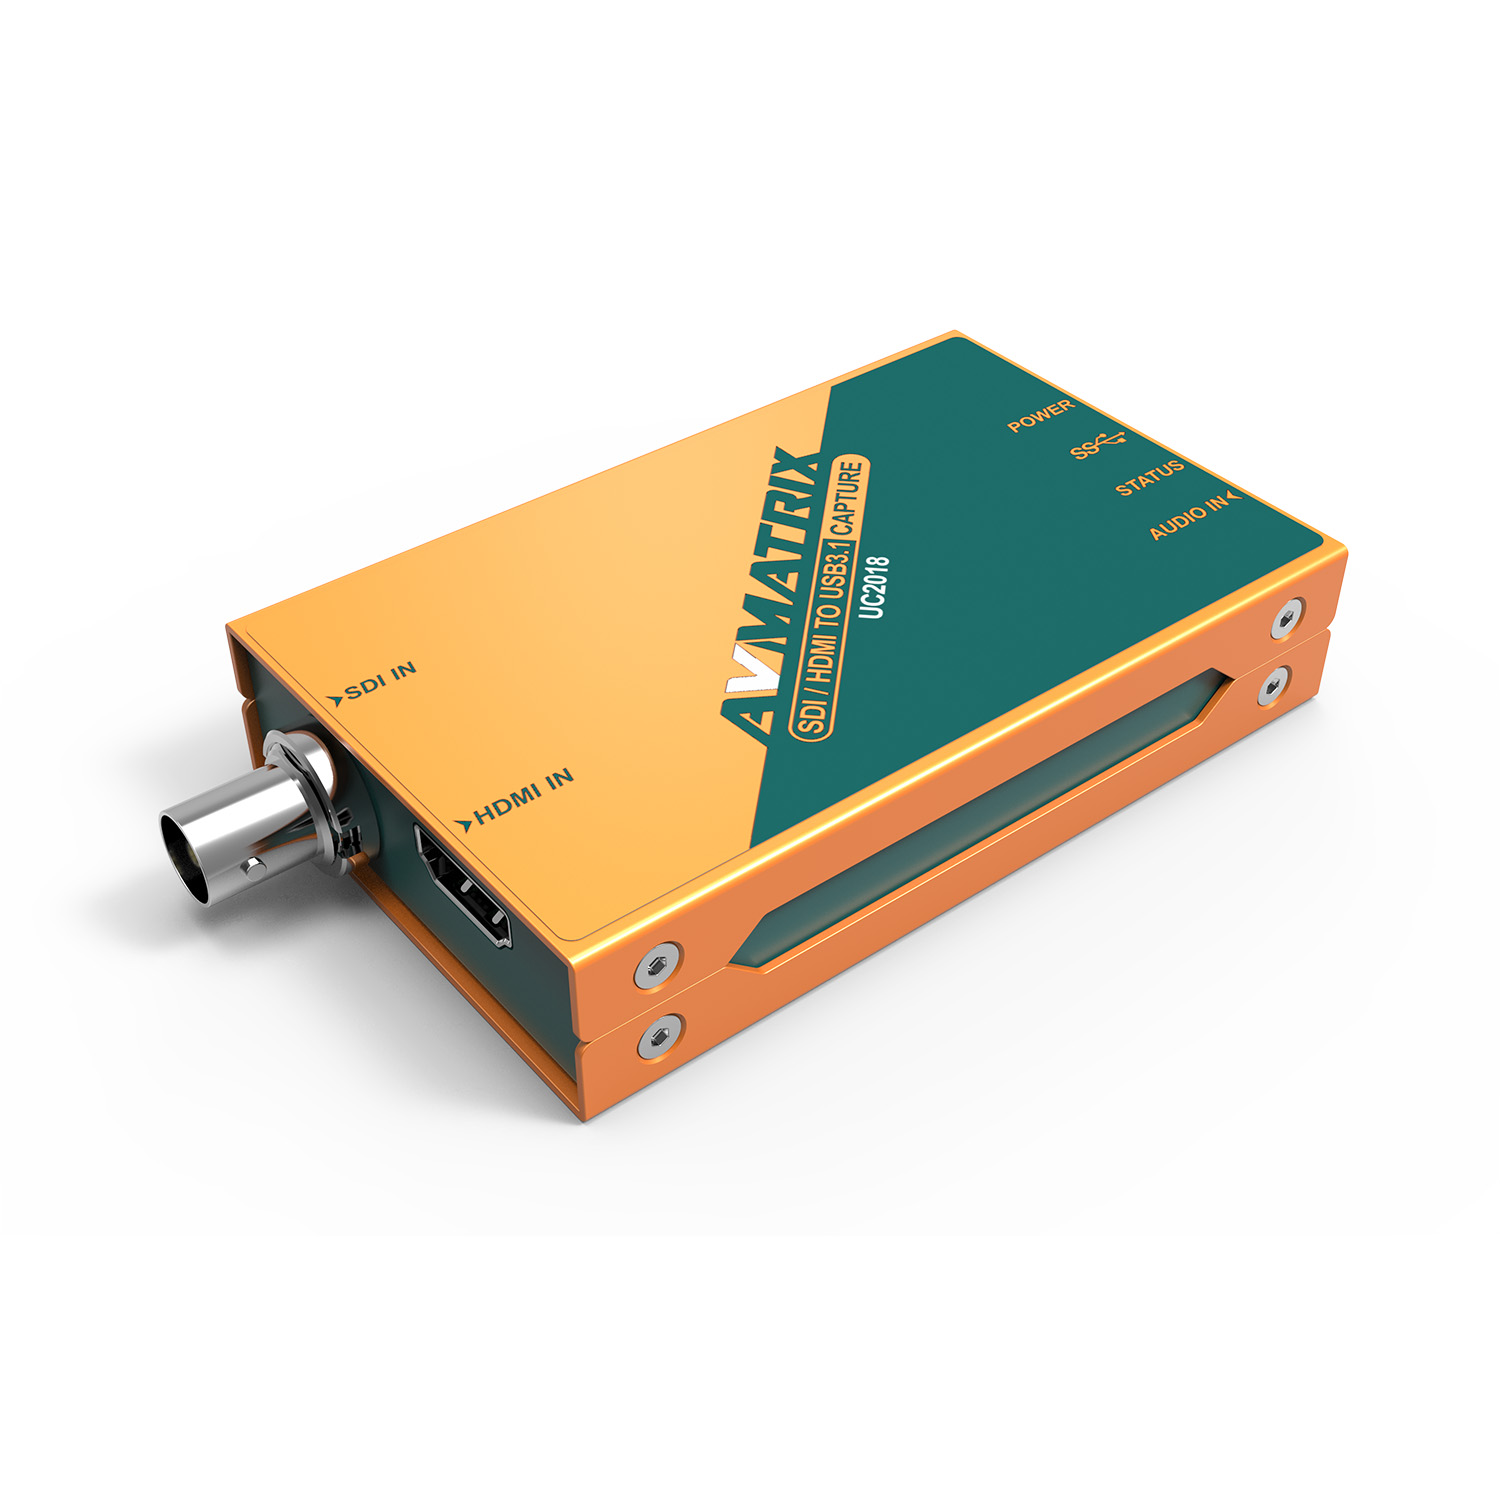 UC2018 SDI/HDMI to USBビデオキャプチャー AVMATRIX